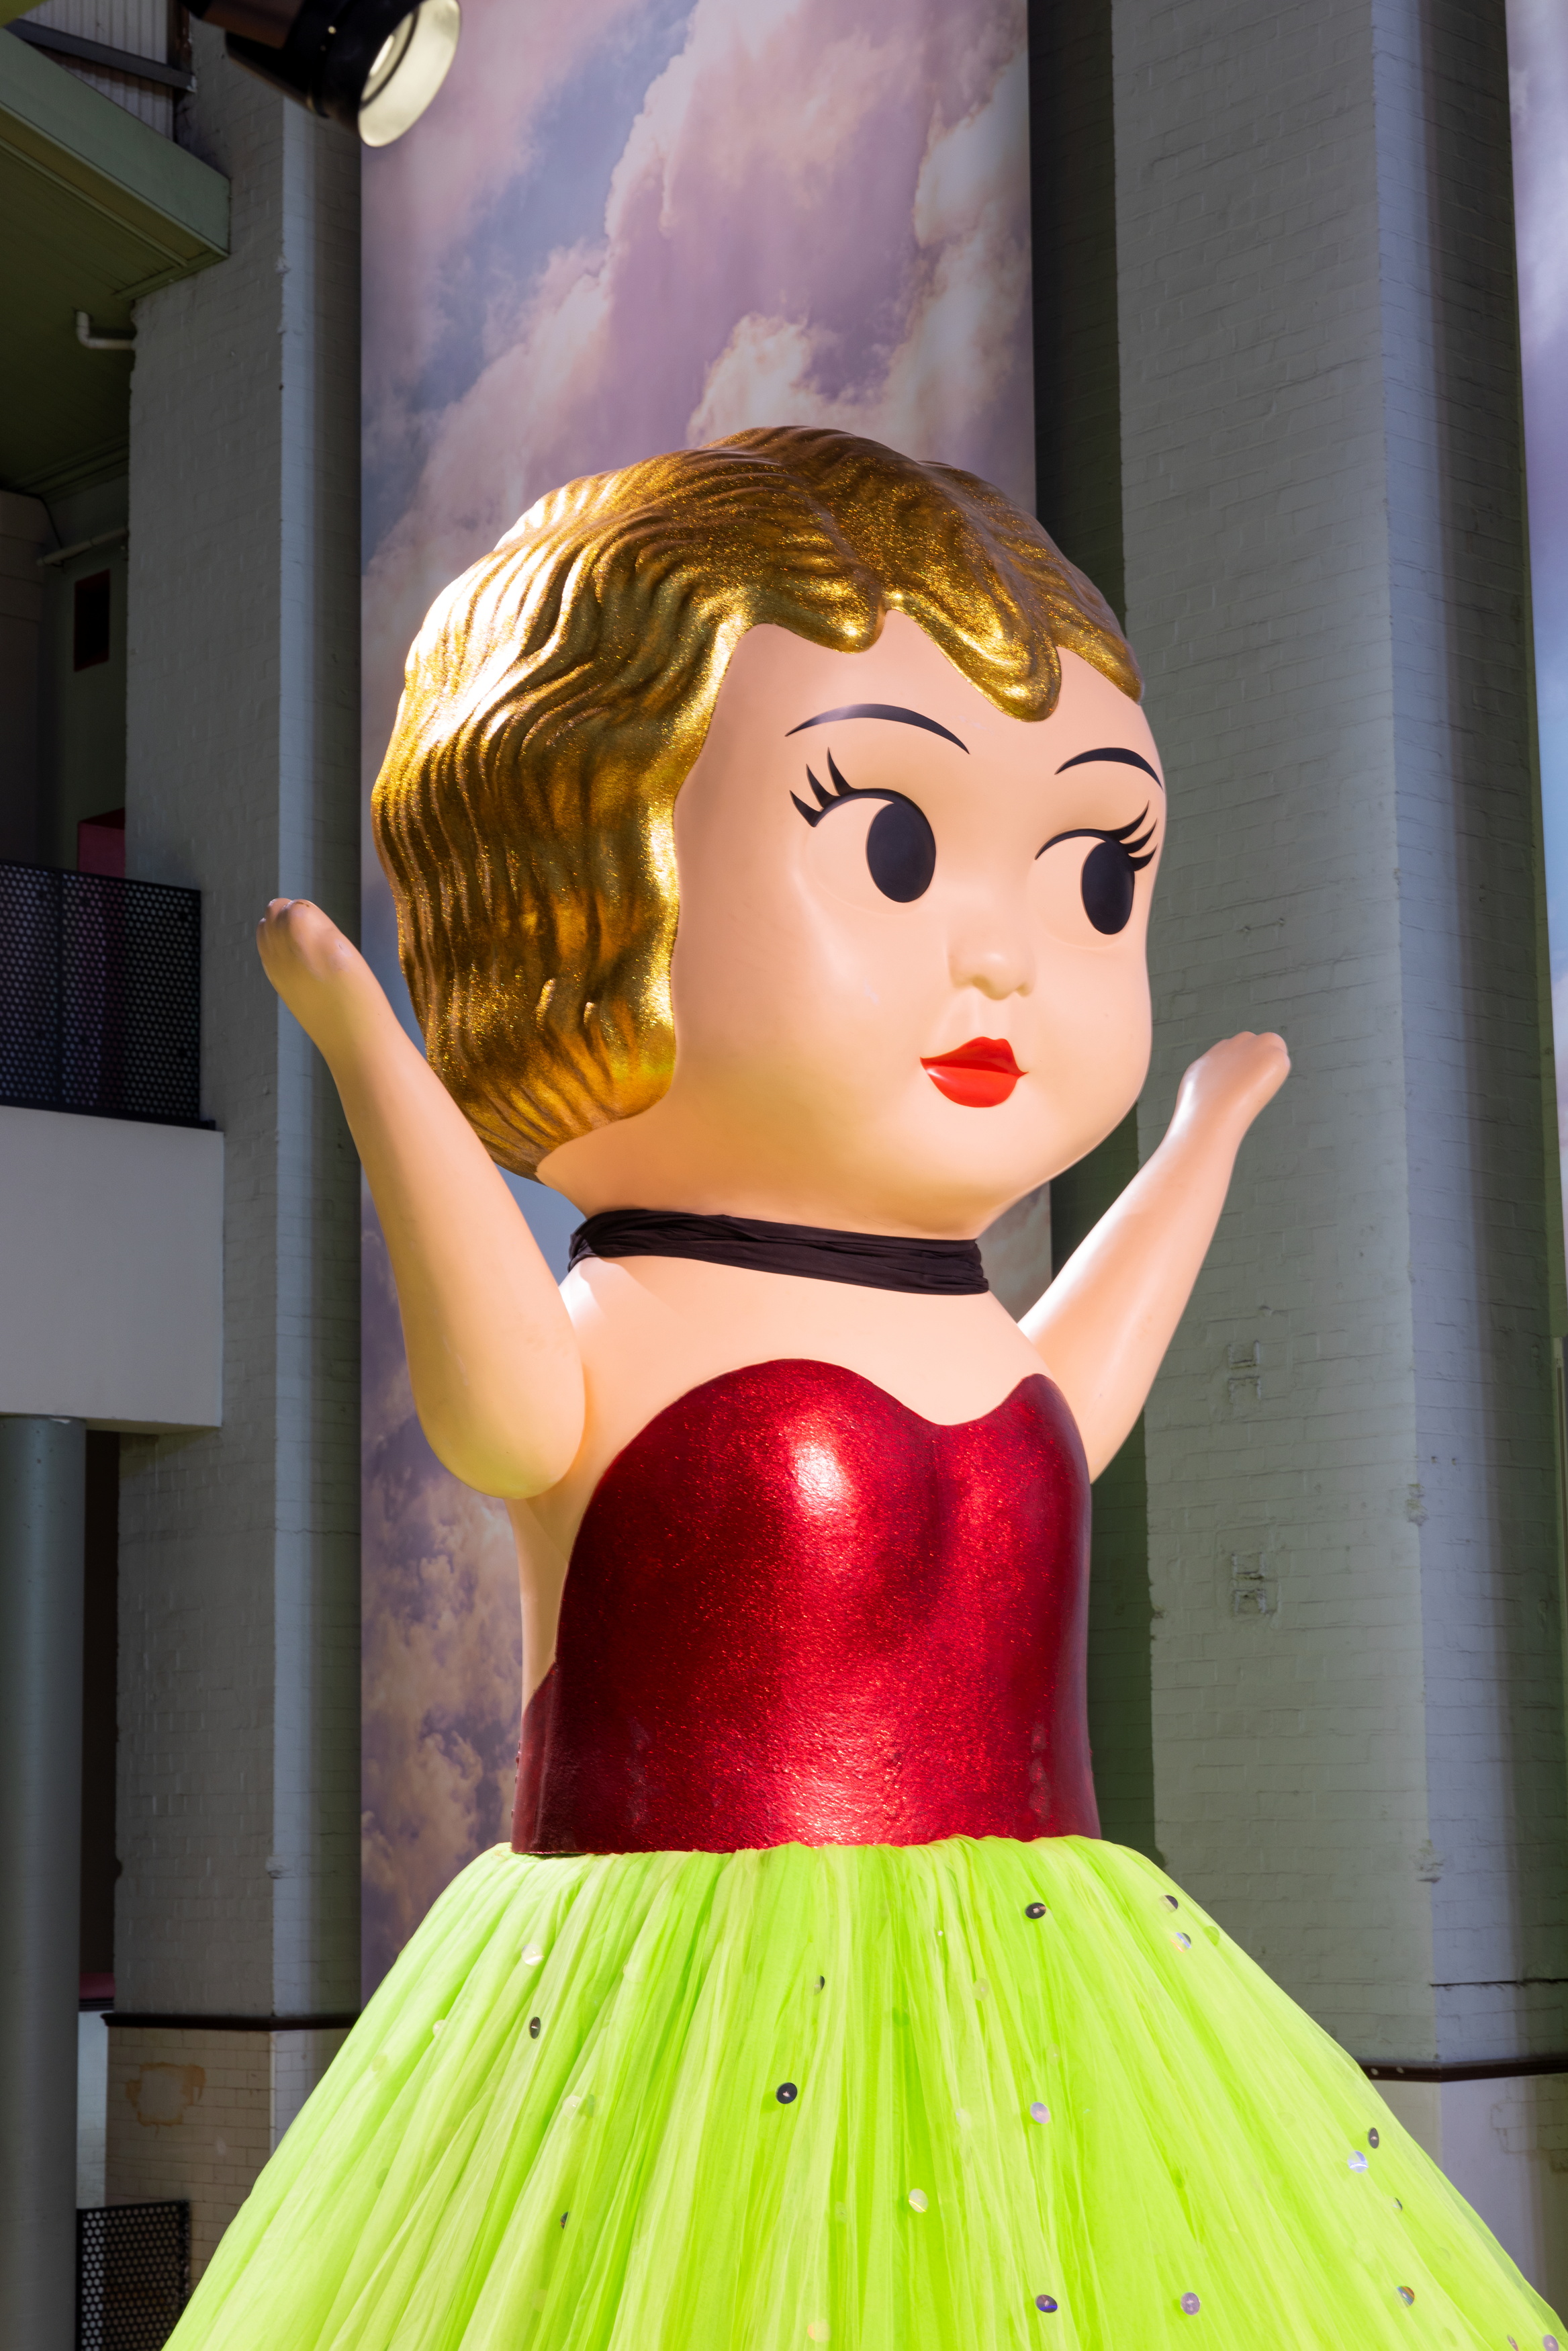 Kewpie doll used in Sydney 2000 Olympic Games Closing Ceremony